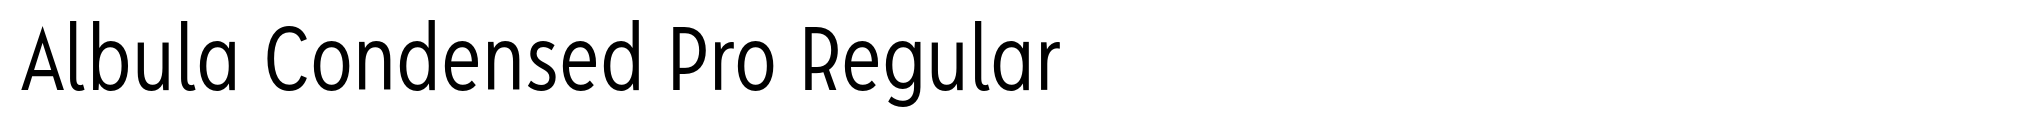 Albula Condensed Pro Regular image